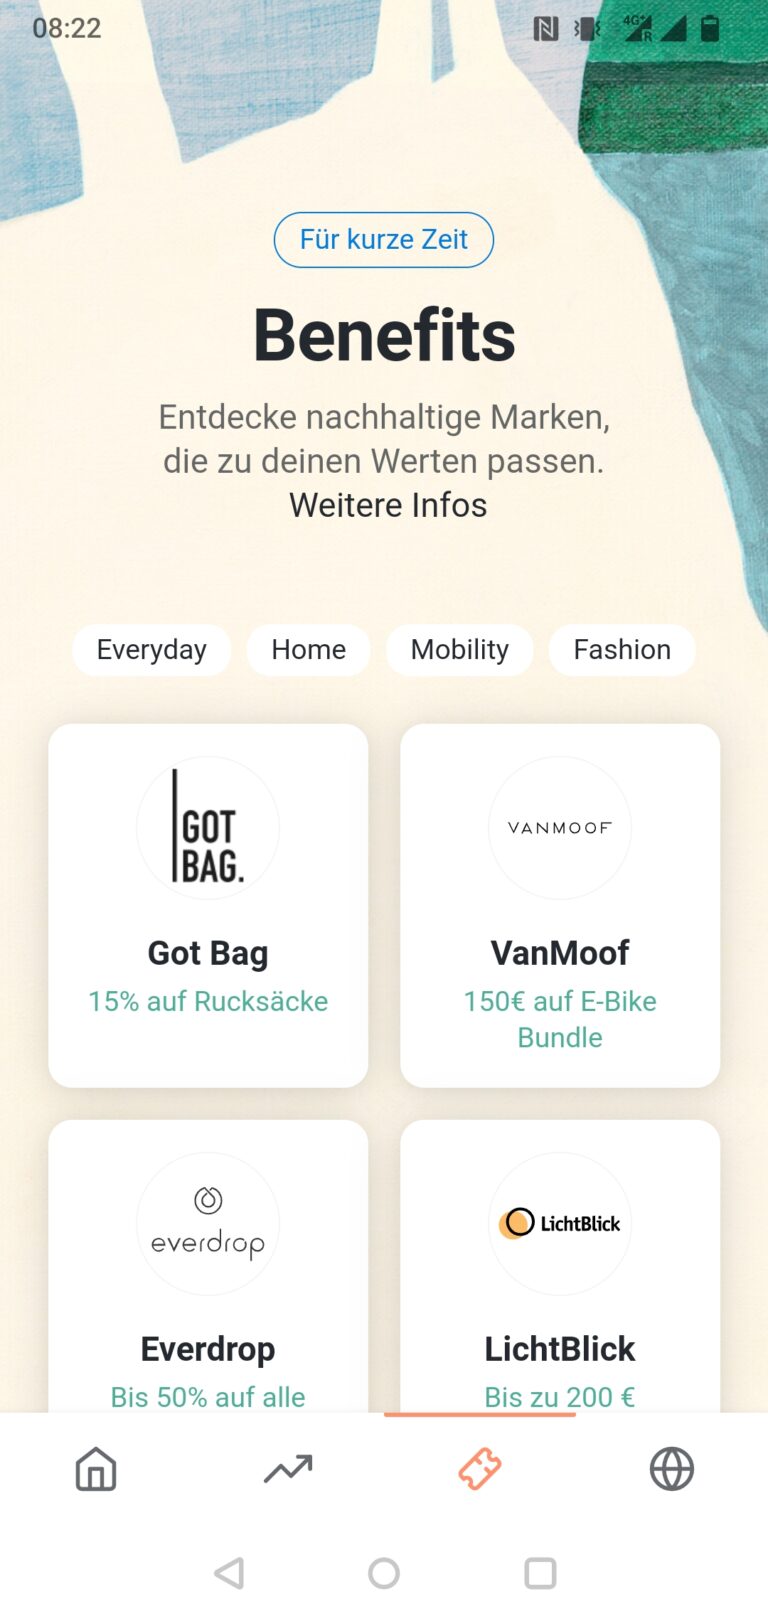 Benefits - Partner-Angebote in der Tomorrow-App